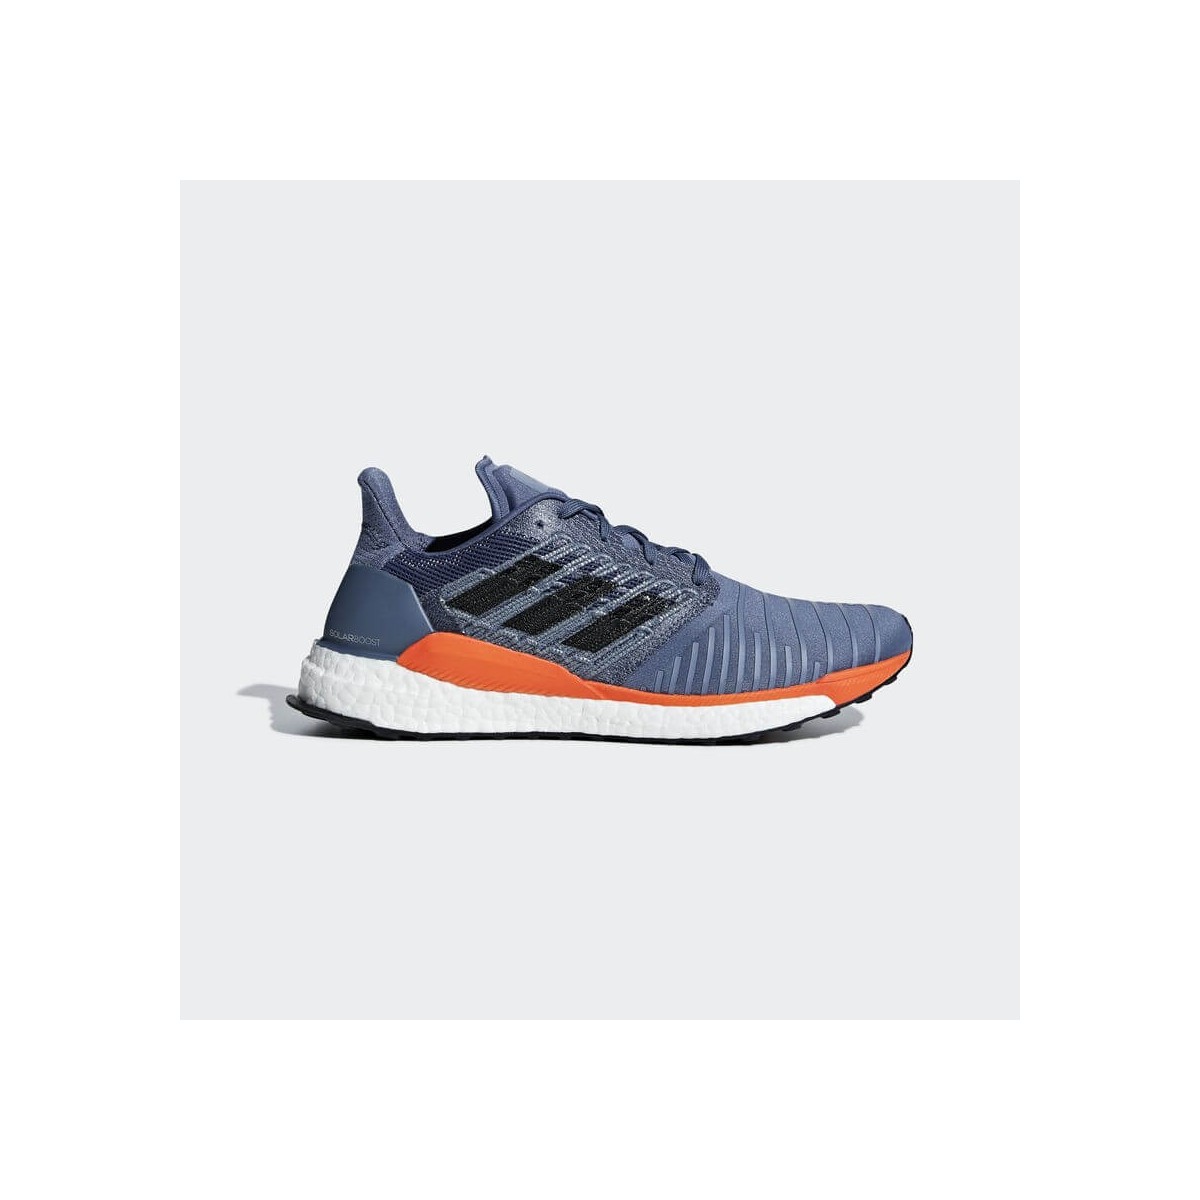 Facultad suerte almuerzo Adidas Solar Boost Running Shoes Ink Blue / Orange AW18 - 365Rider